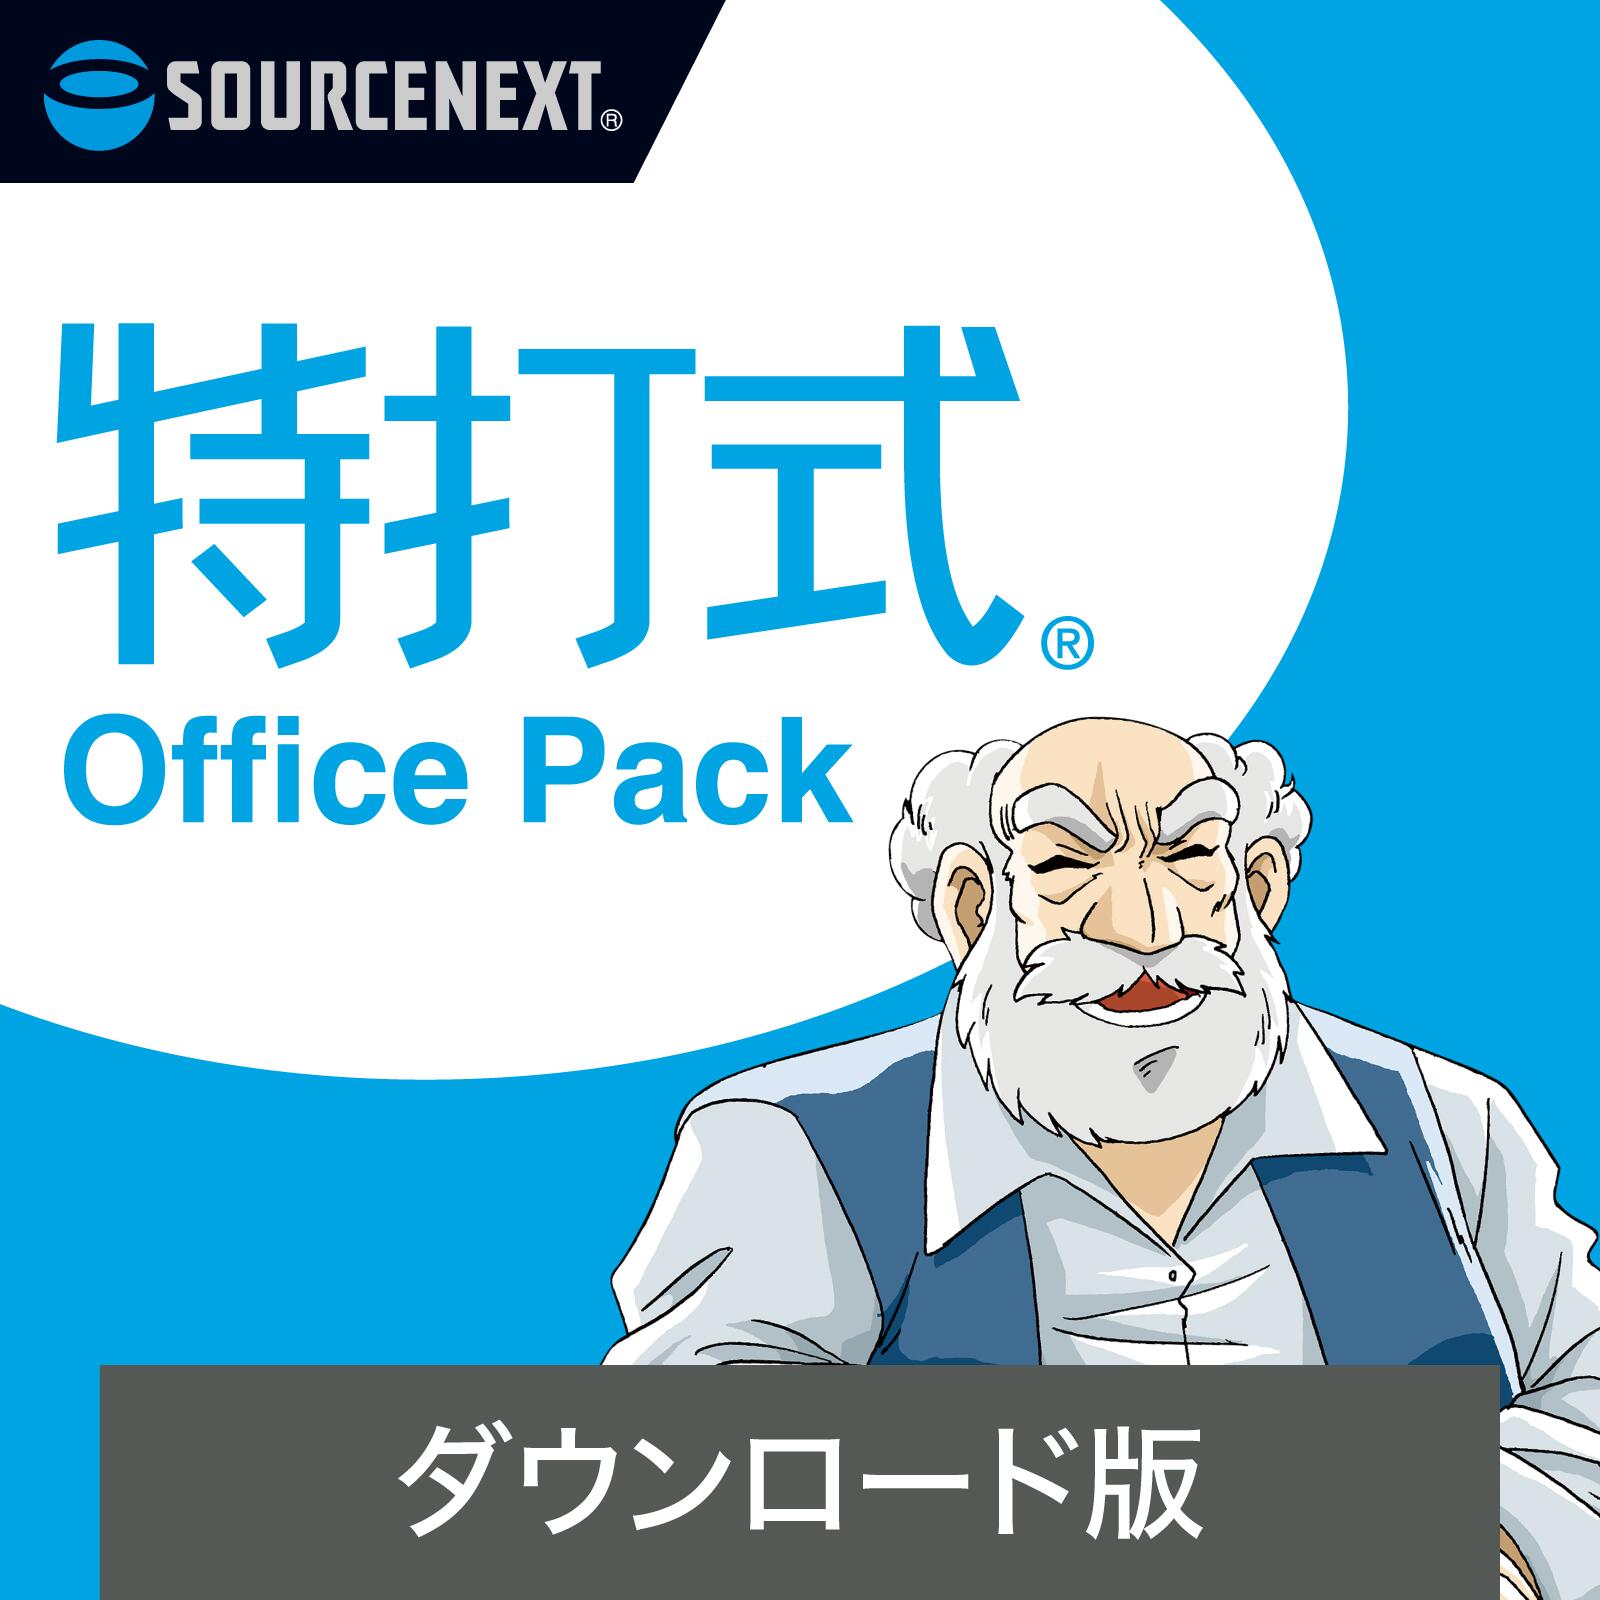  }\艿i Ŏ OfficePack   E[h  DL SNR